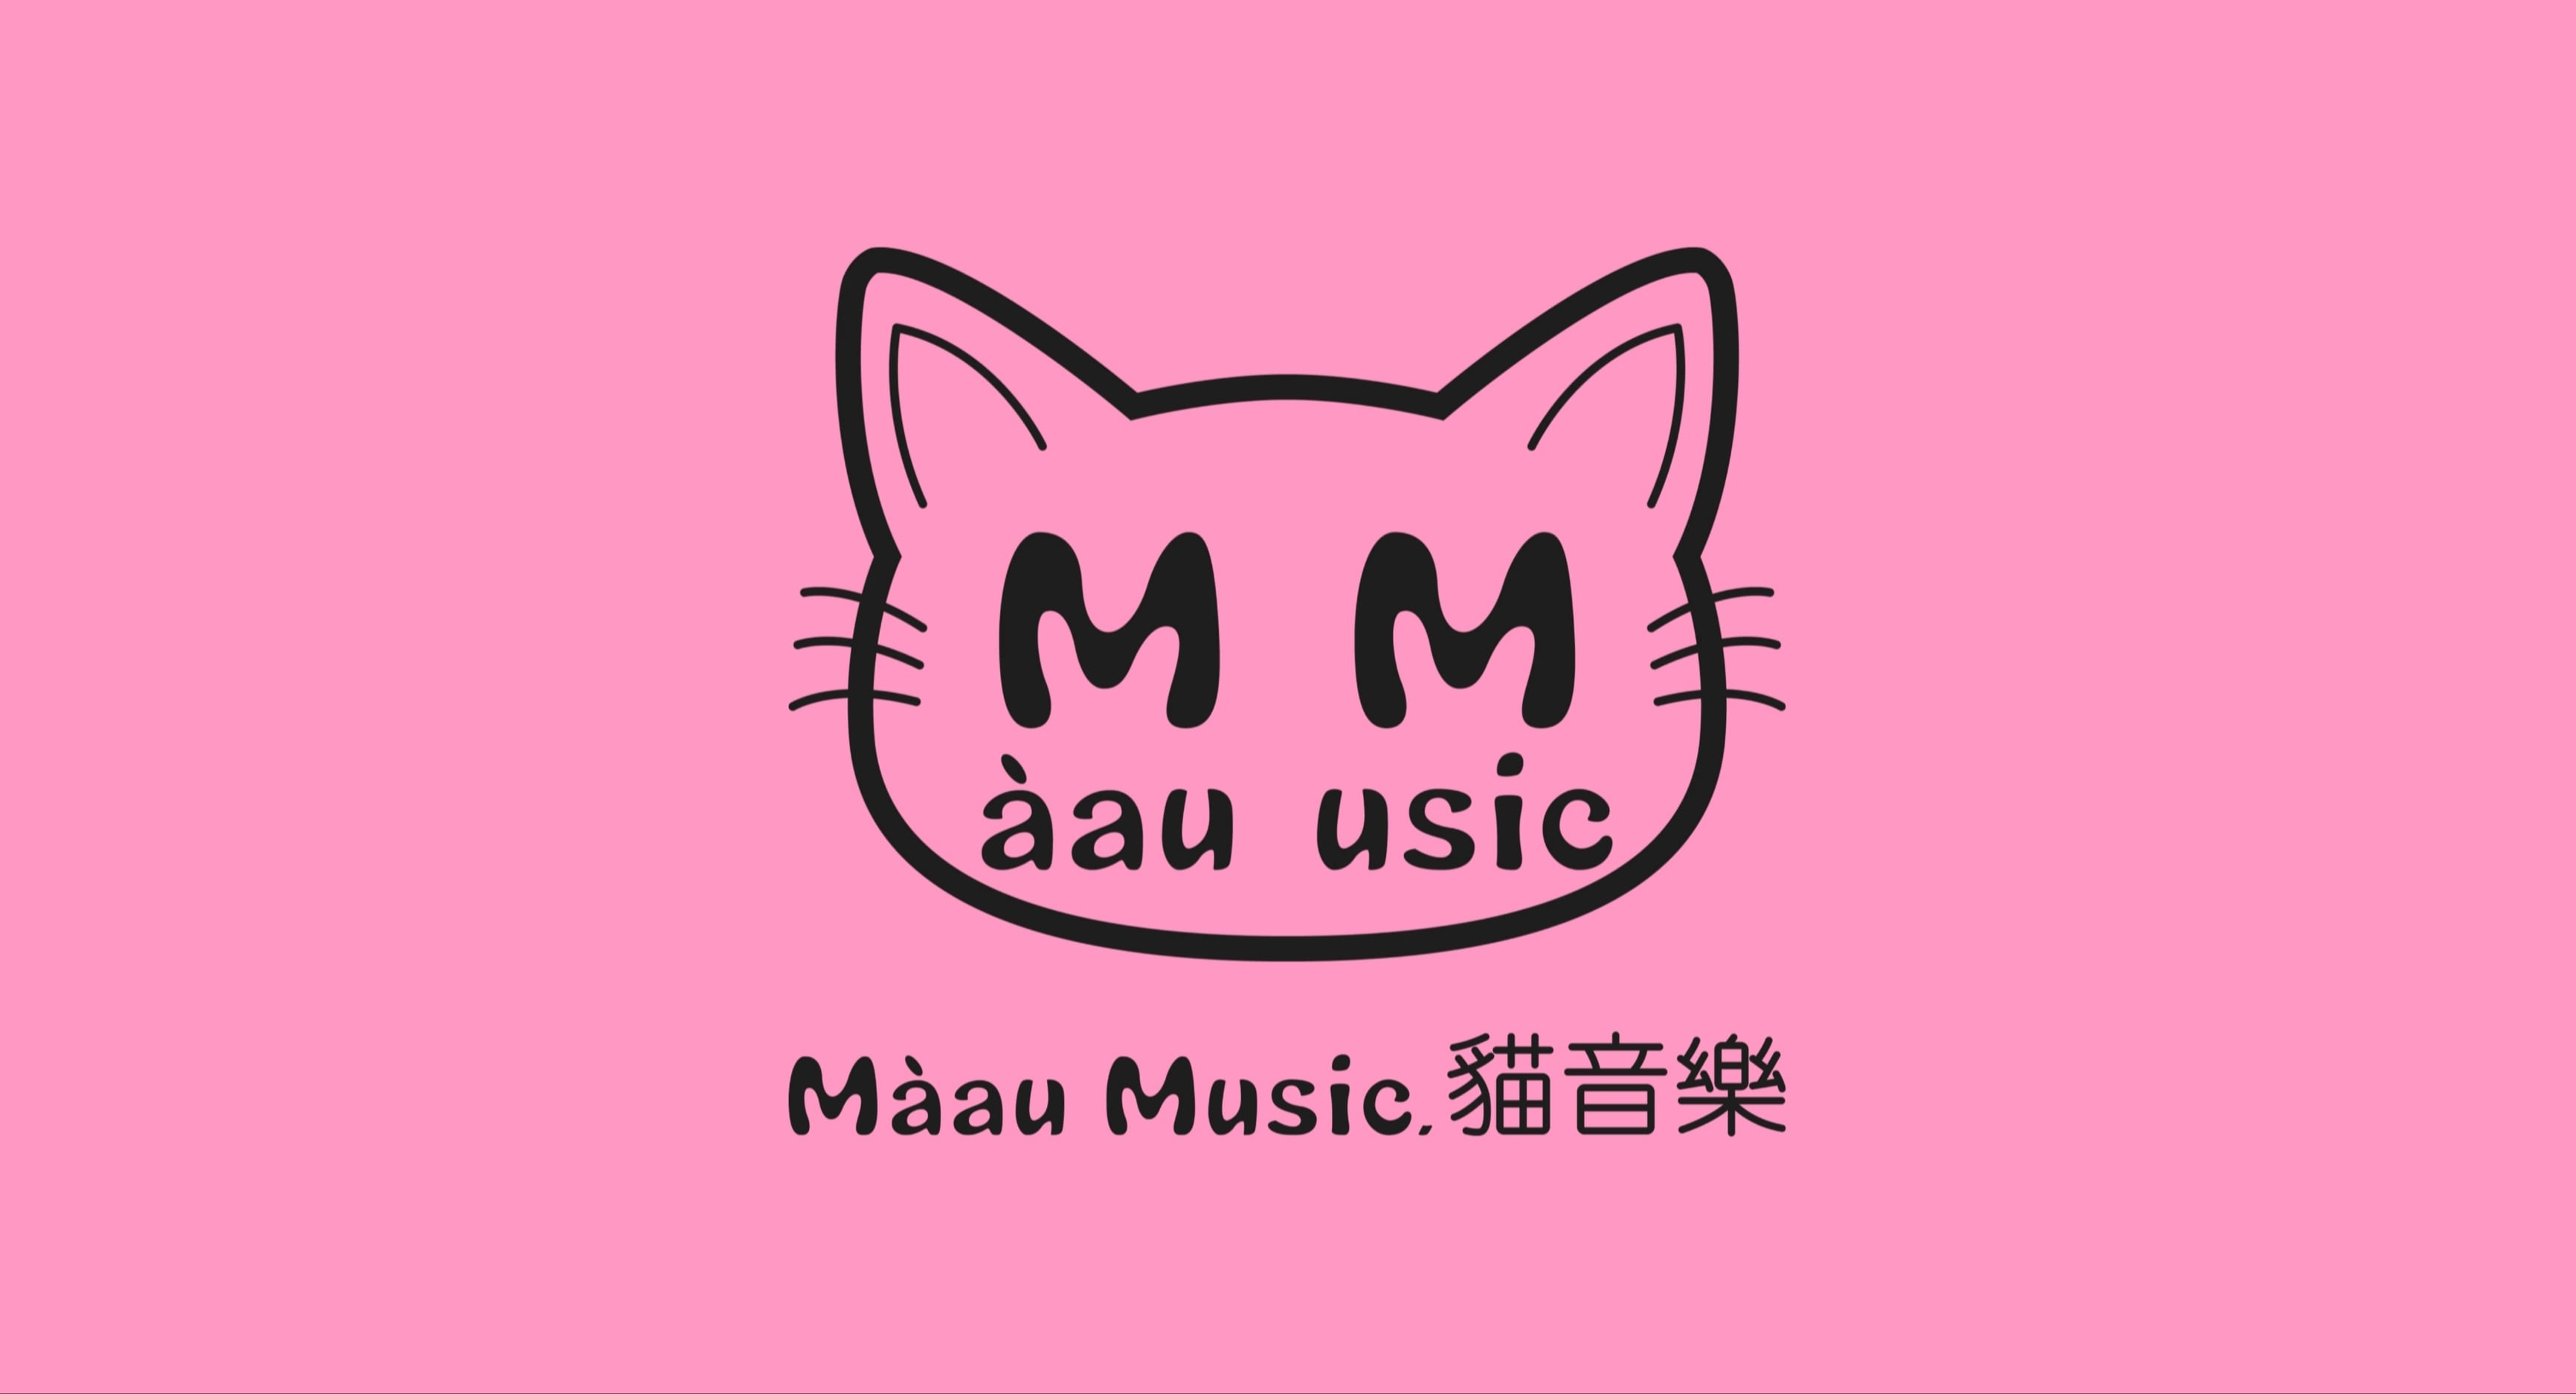 MaauMusicShop マウミュージックショップ